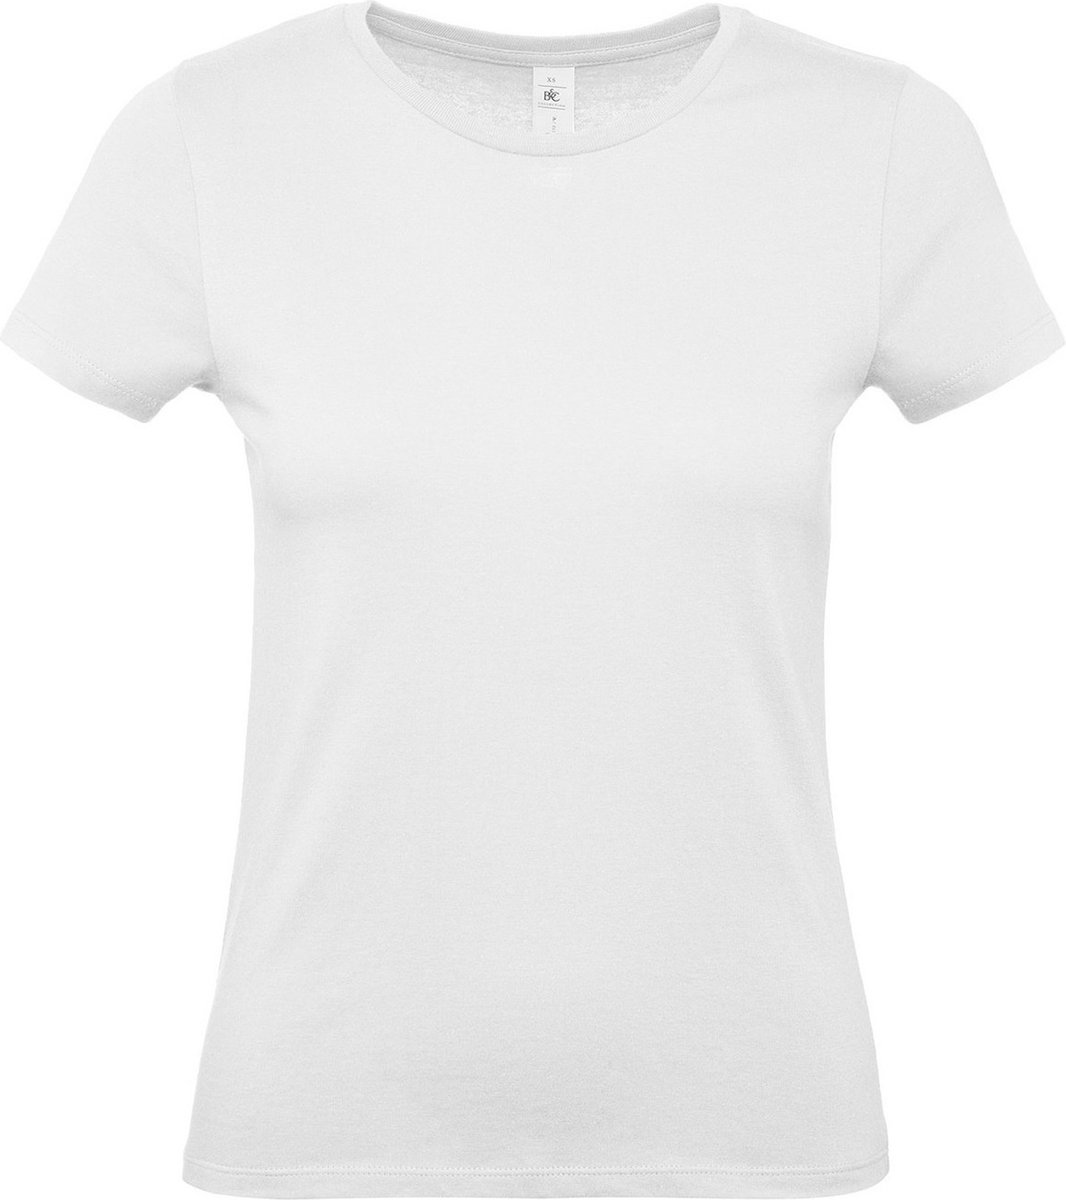 Wit basic t-shirts voor dames met ronde hals - katoen - 145 grams - witte shirts / kleding M (38)